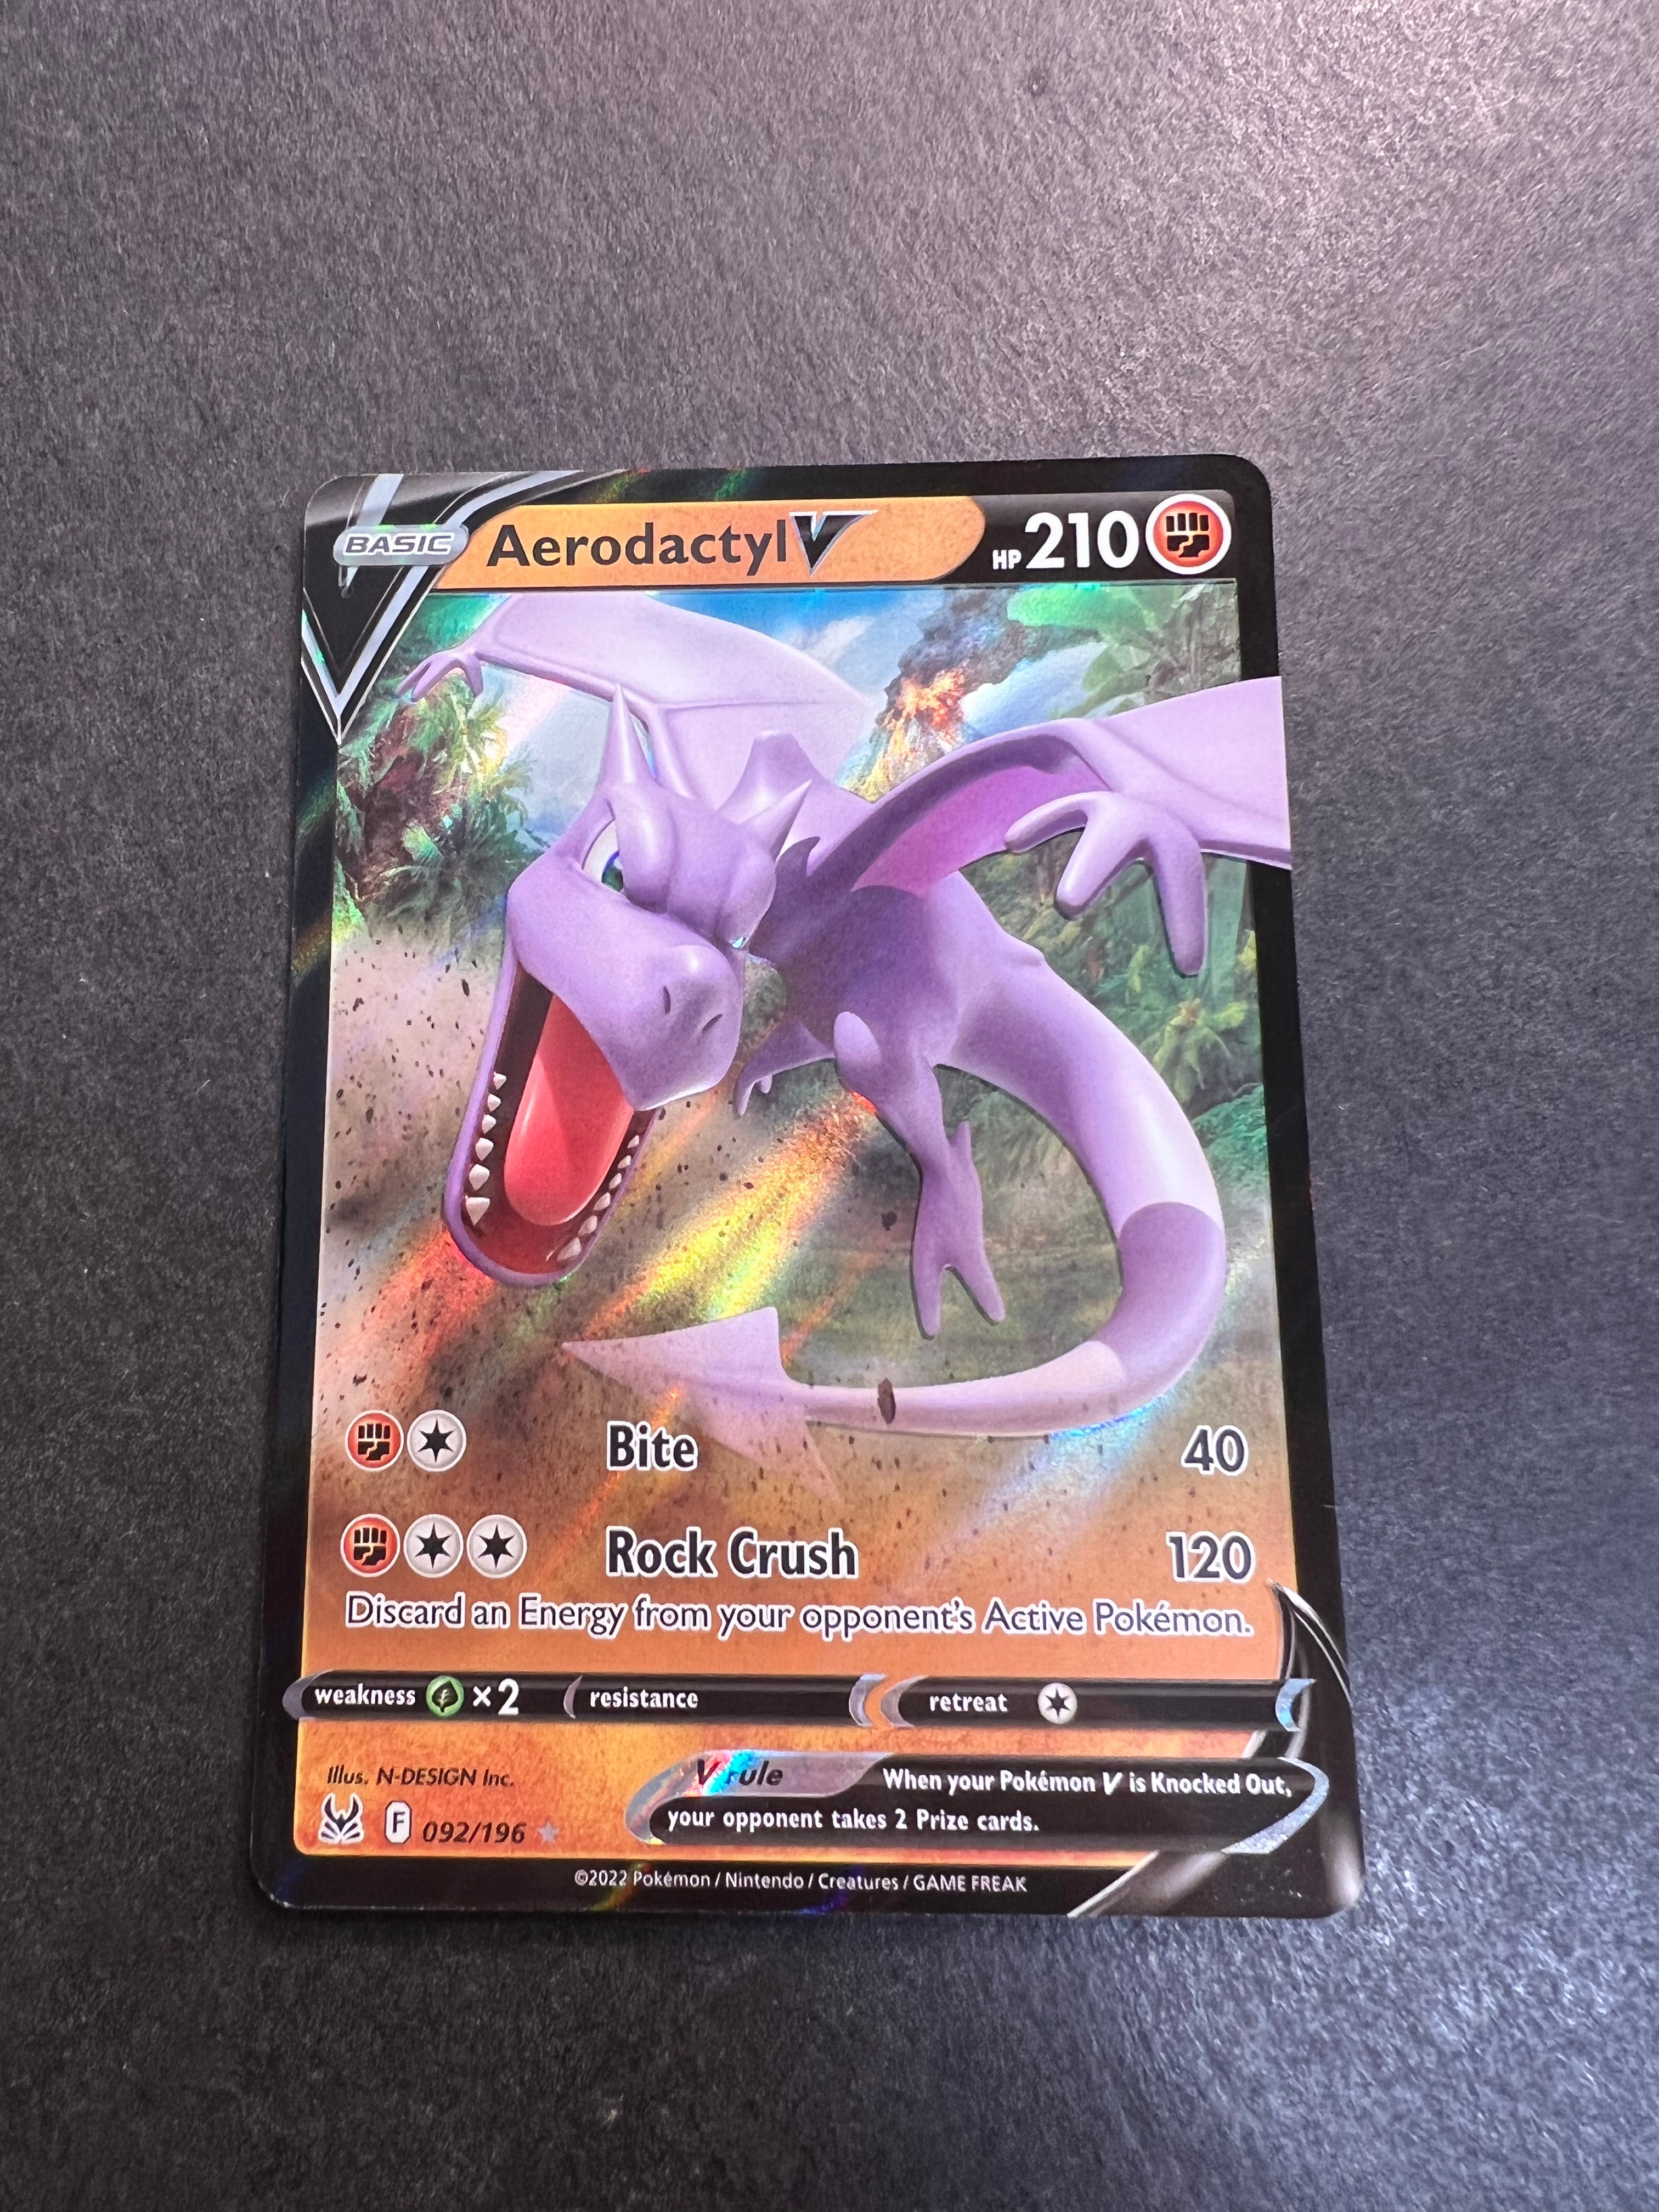 LOR 092 - Aerodactyl V Lost Origin buy Pokemon cards 2hg nl